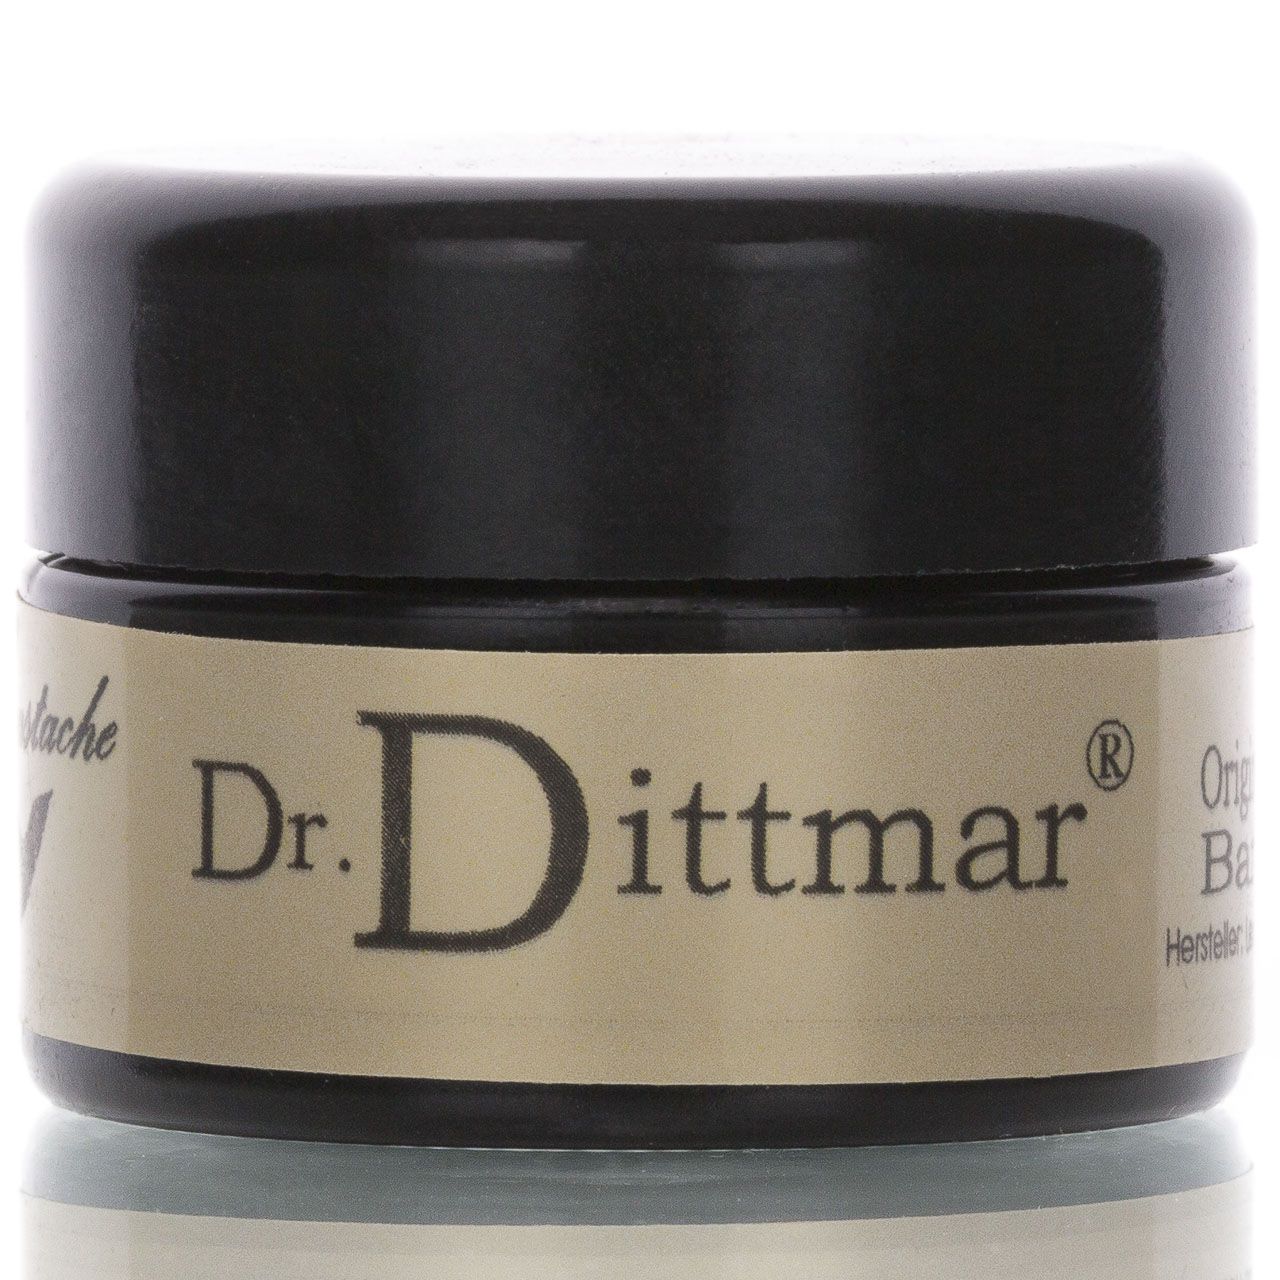 Dr. Dittmar Original | 16ml blackbeards ungarische Bartpflege Bartwichse 